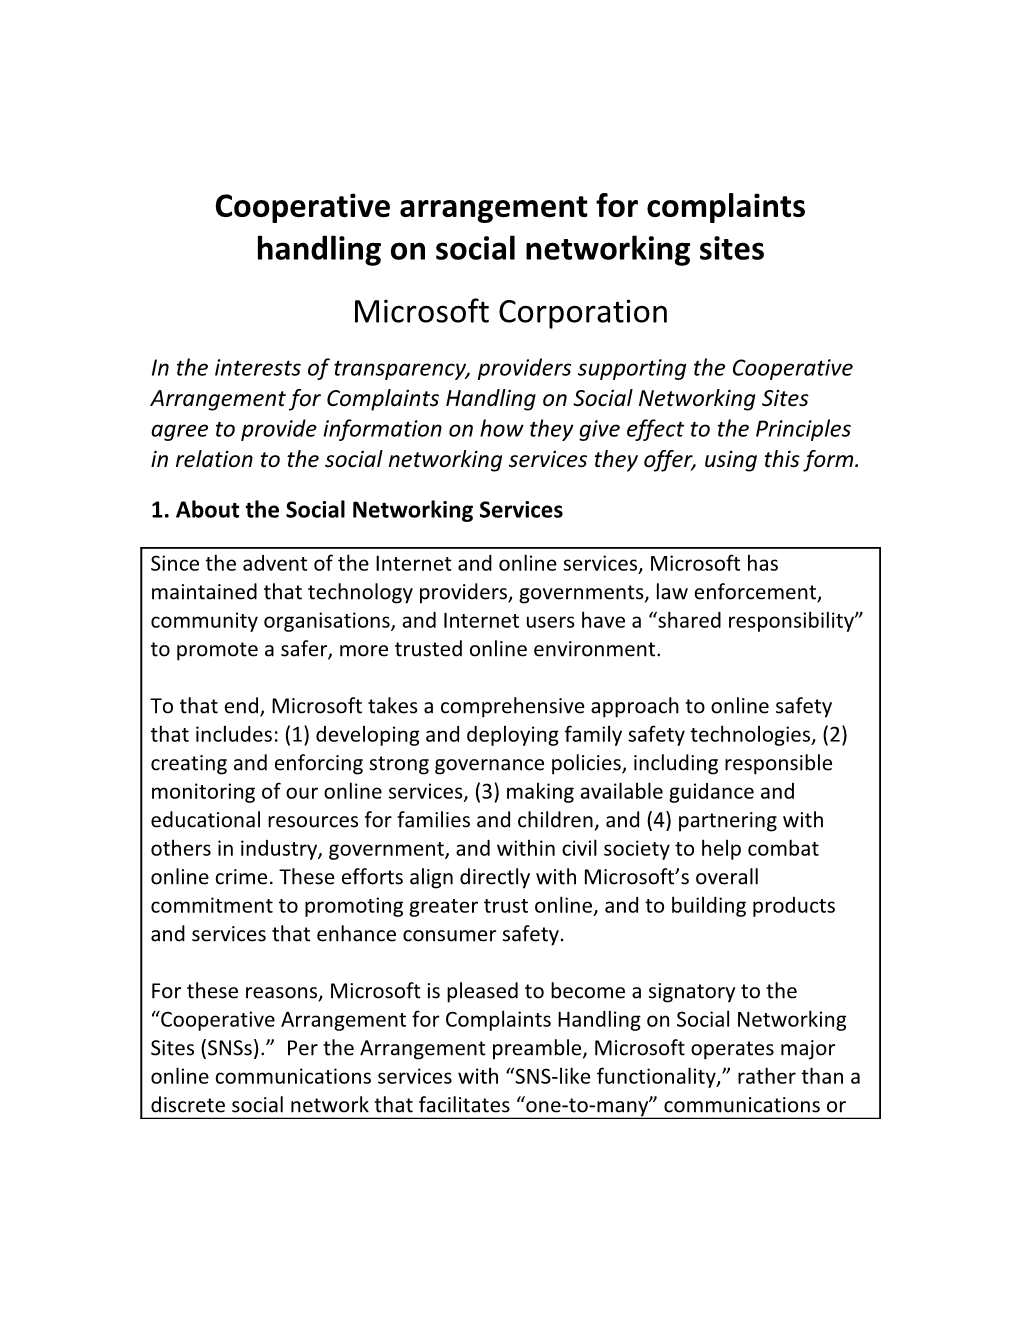 Cooperative Arrangement for Complaints Handling on Social Networking Sites